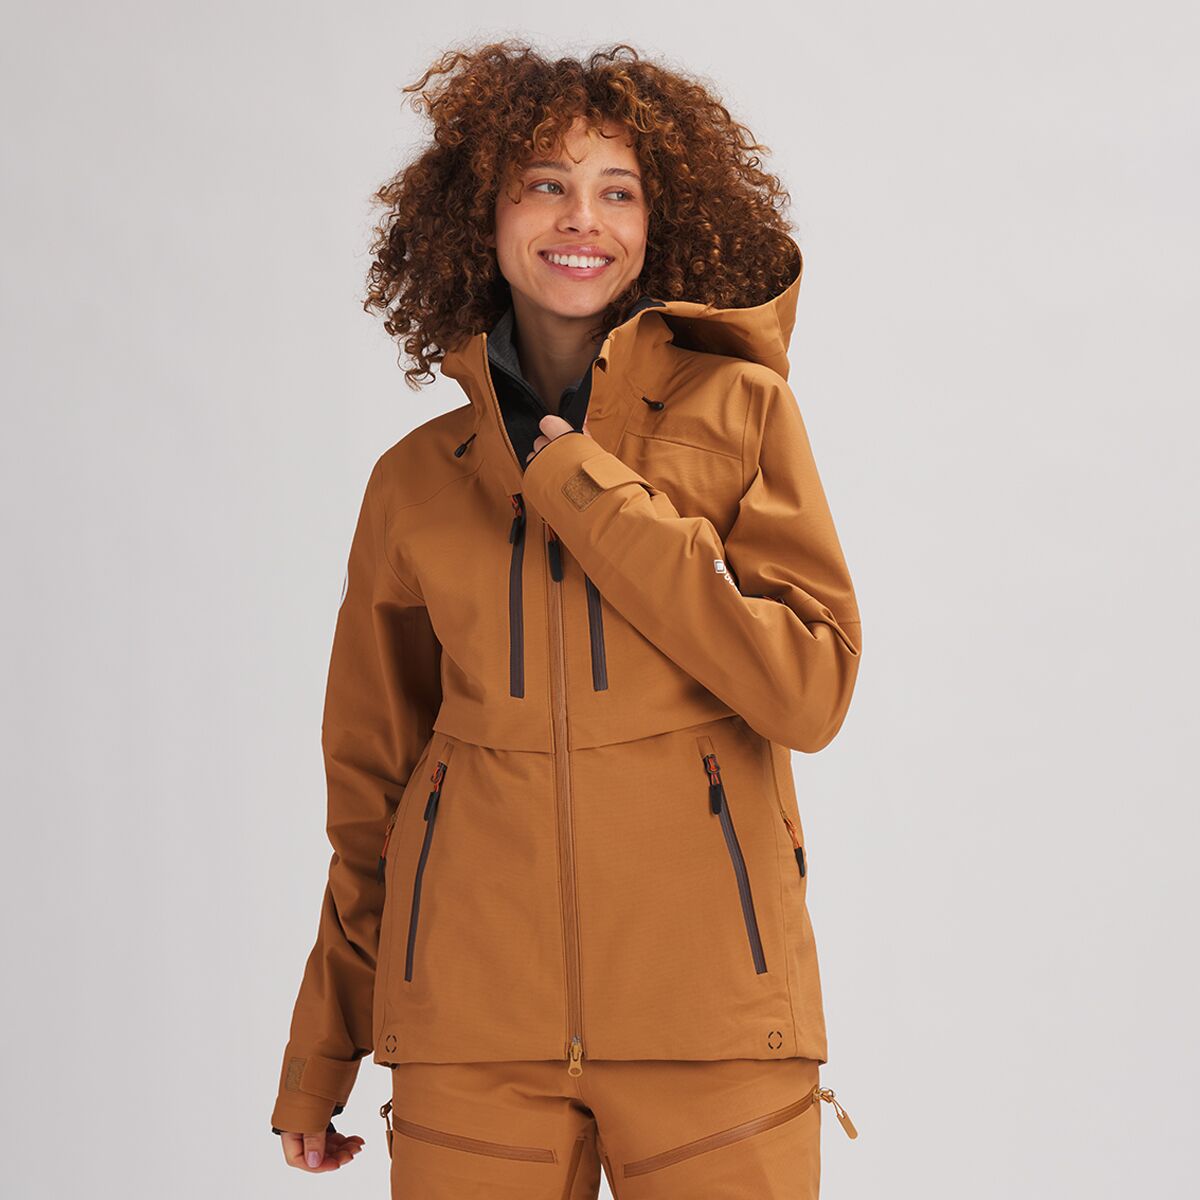 Backcountry Cottonwoods GORE-TEX Jacket - Women's product image